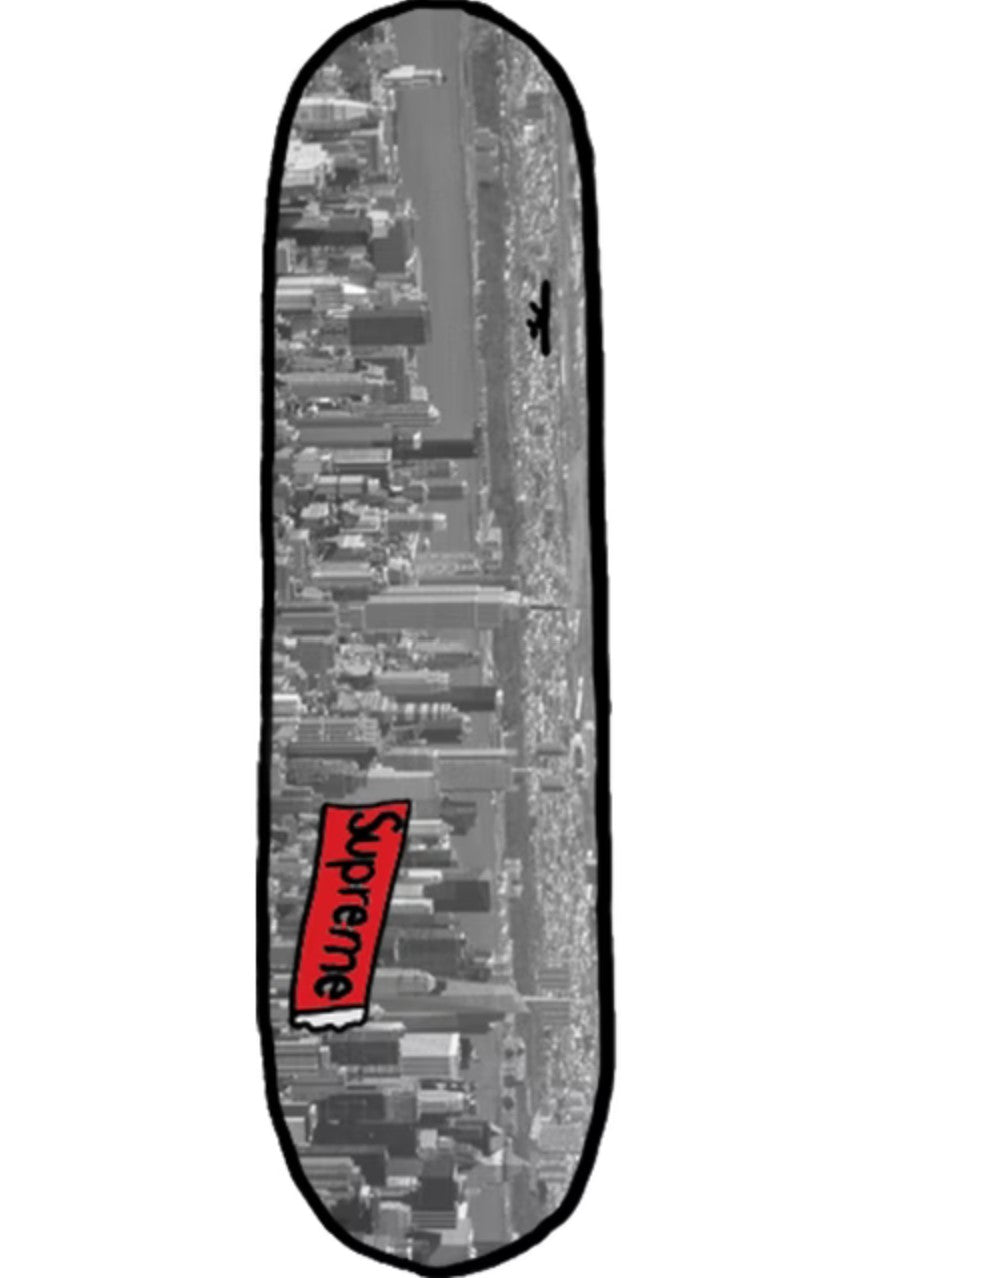 Aerial Skateboard Art Deck by Supreme